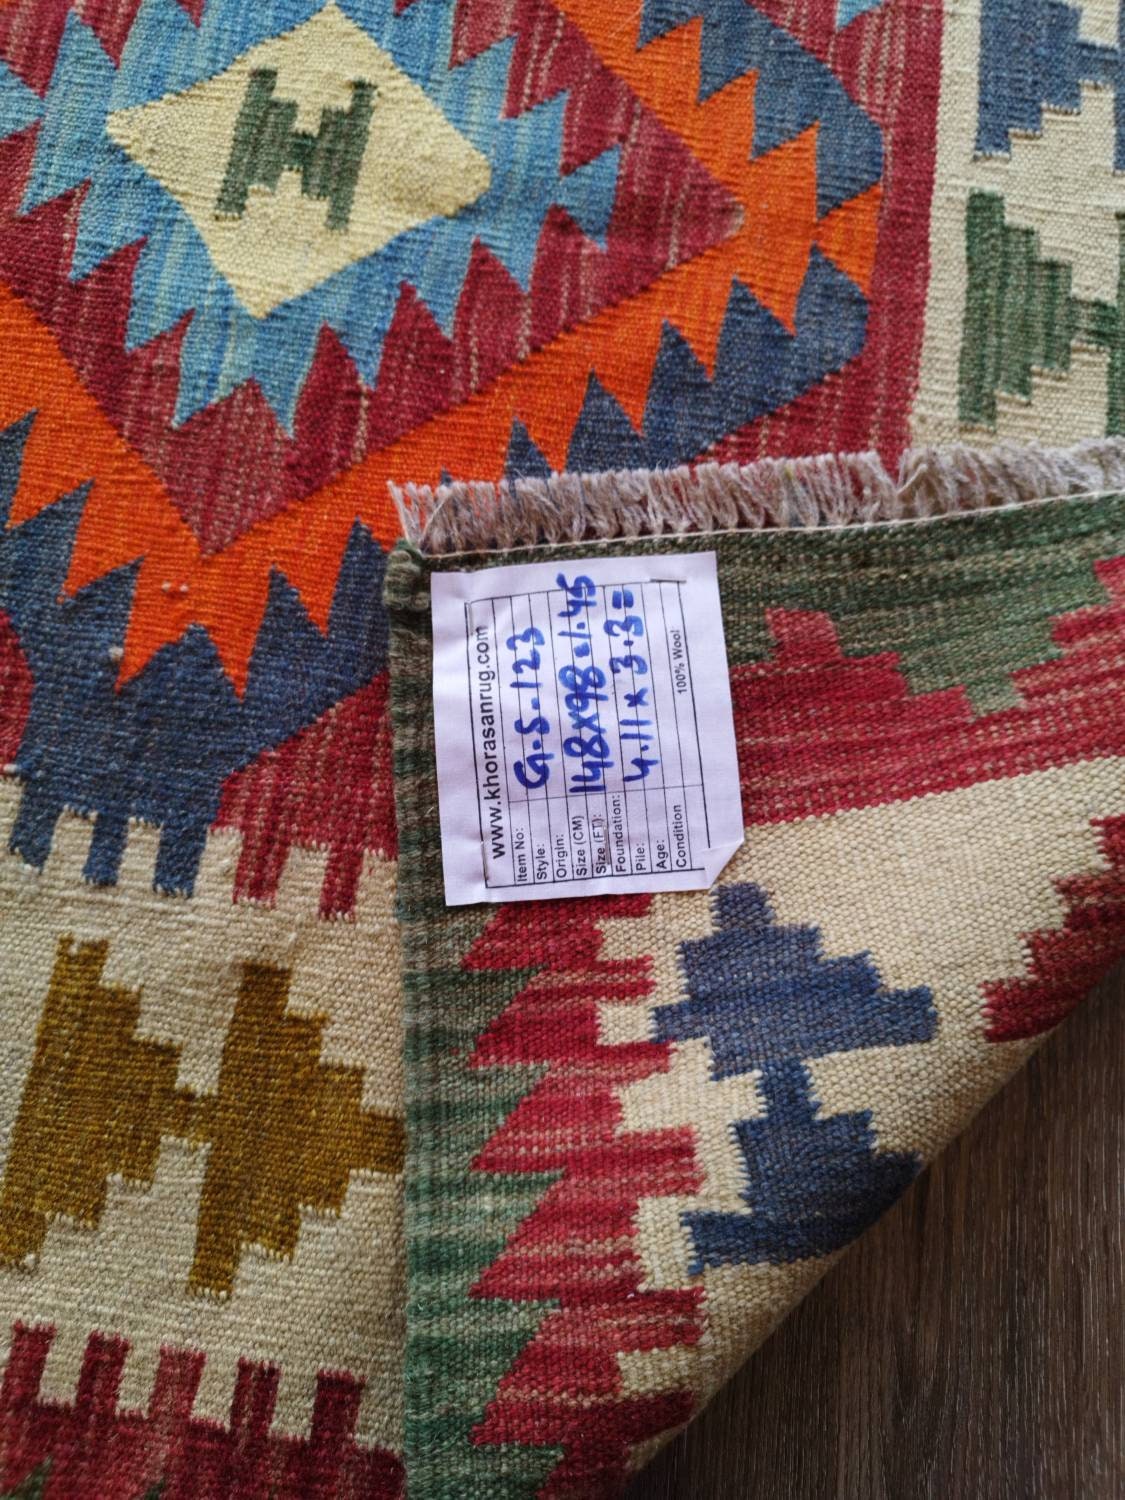 Kilim rug Afghan Wool Kilimrug,  colorful woven rugs, oushak vintage rugs, sumak rug, boho rug, surya rugs, sumac rug,  modern furniture rug